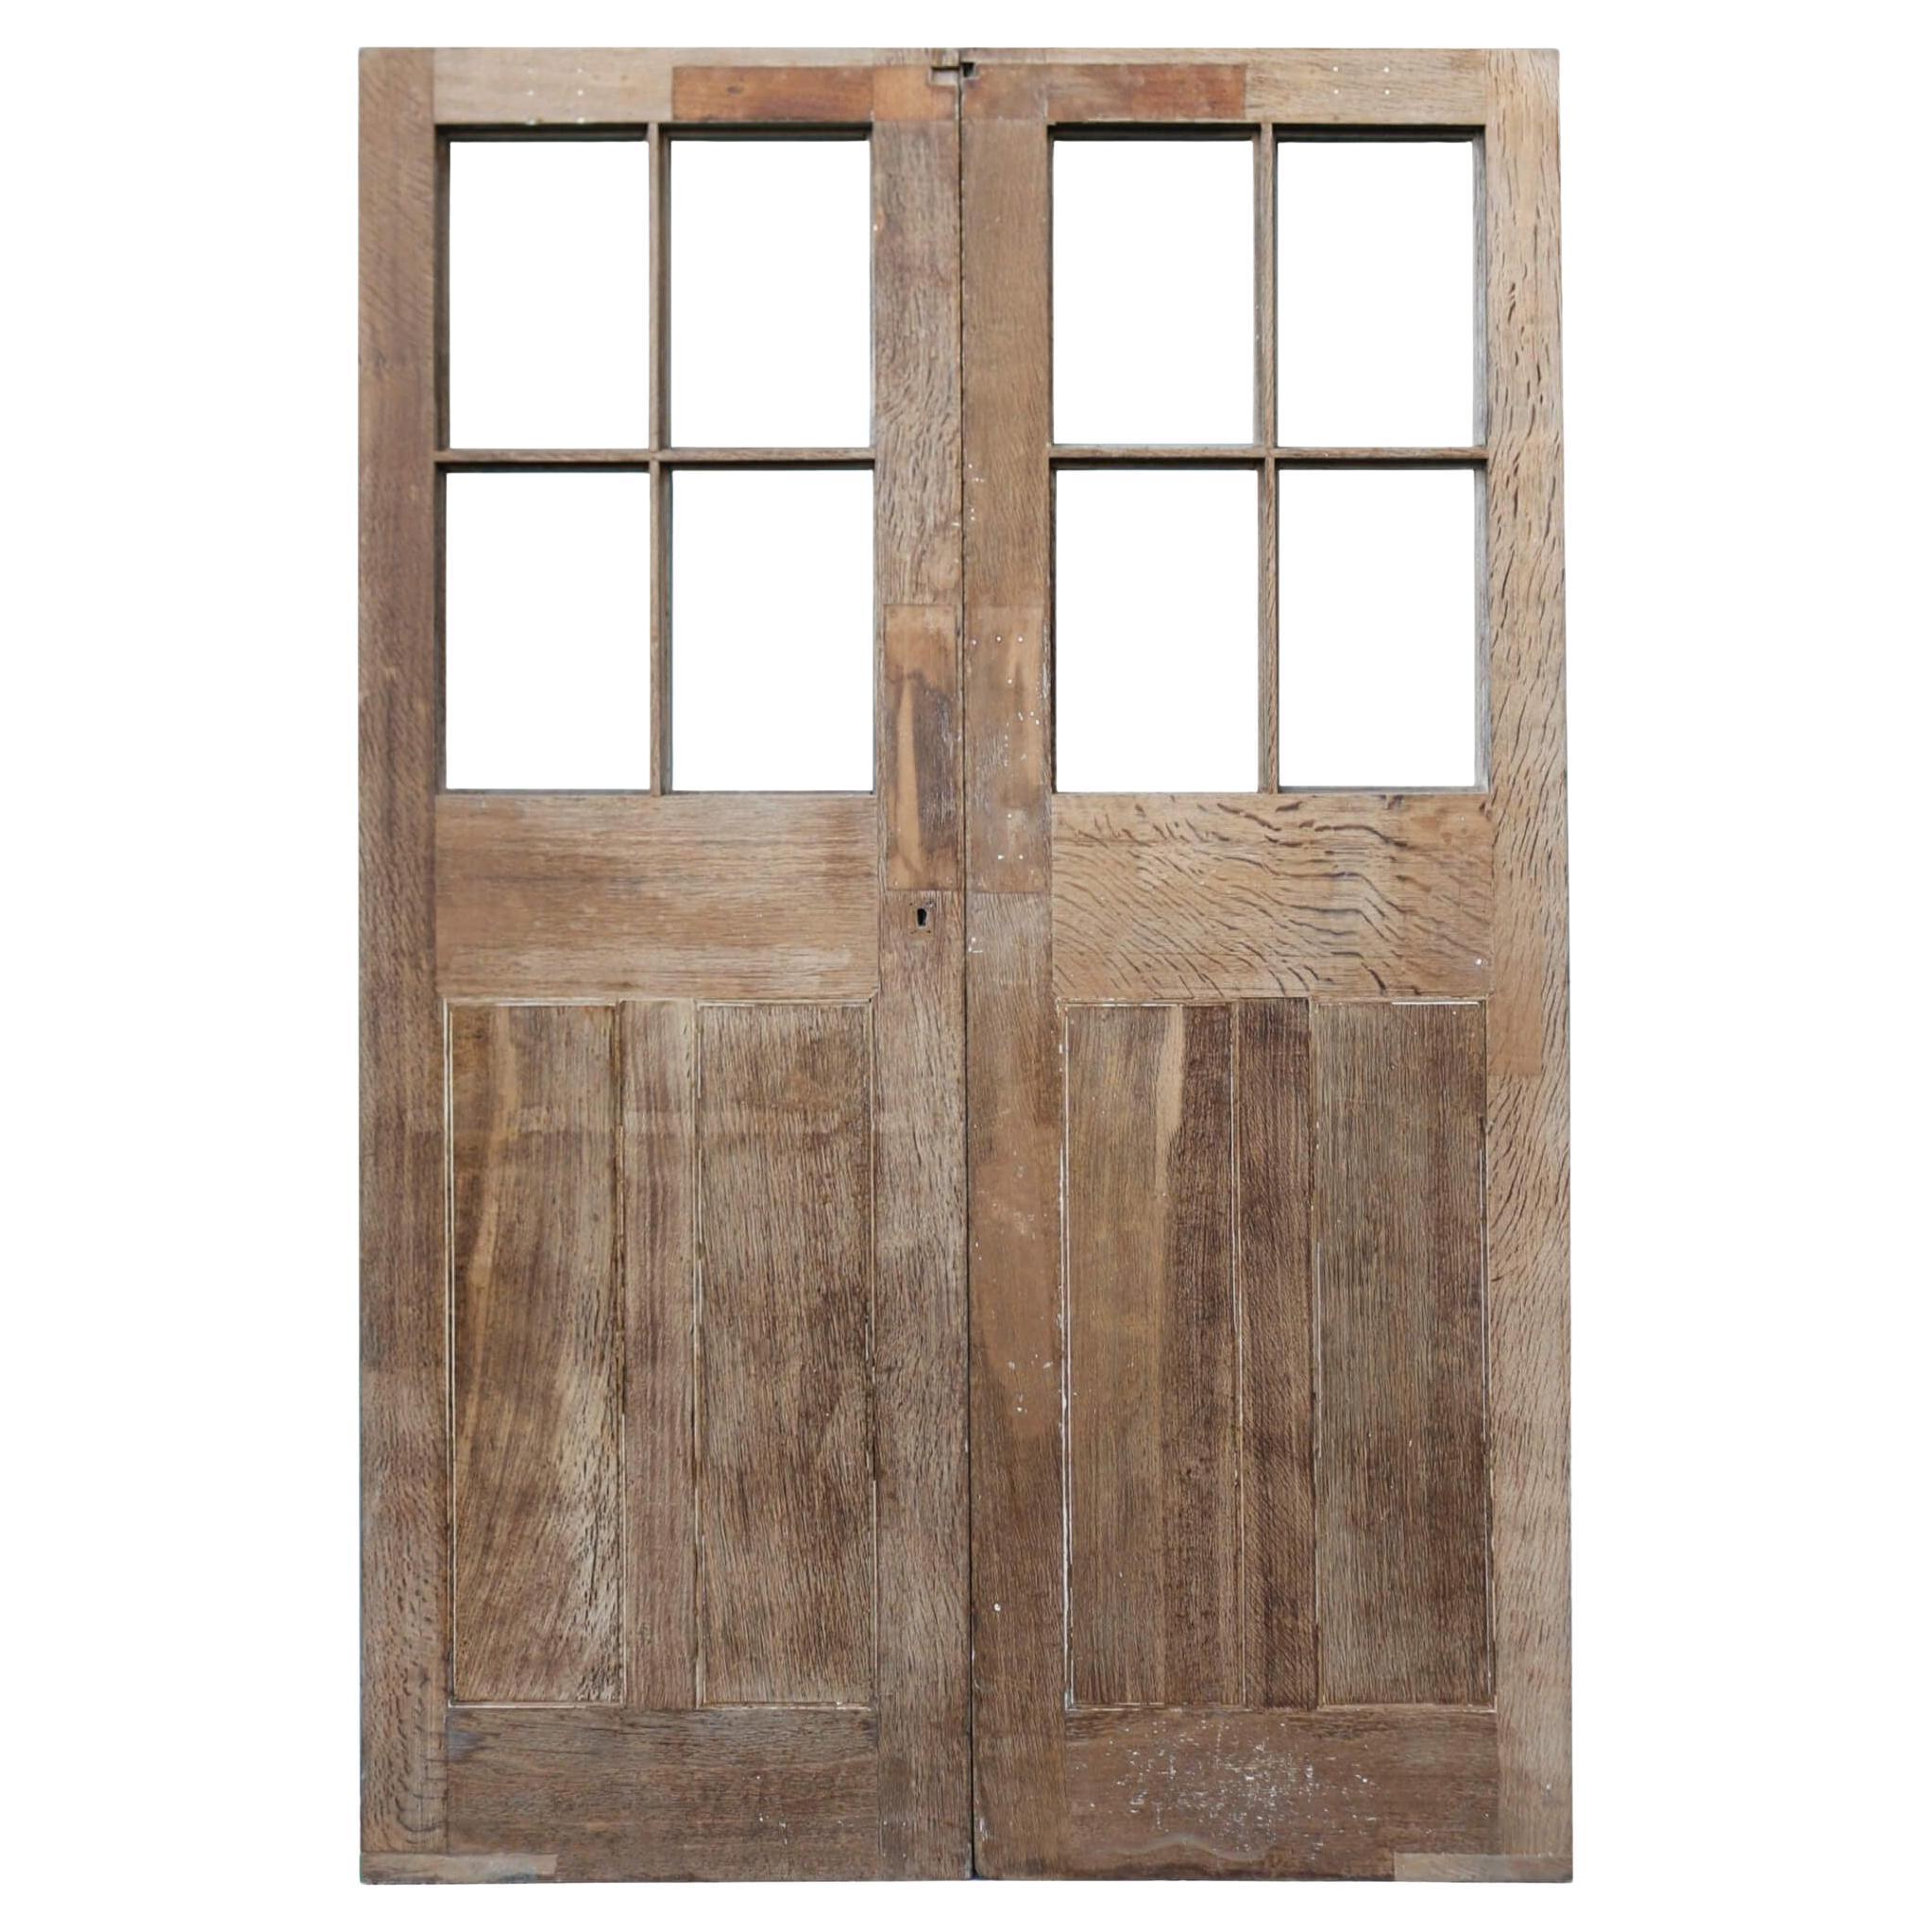 Set of Edwardian Stripped Oak Double Doors for Glazing For Sale